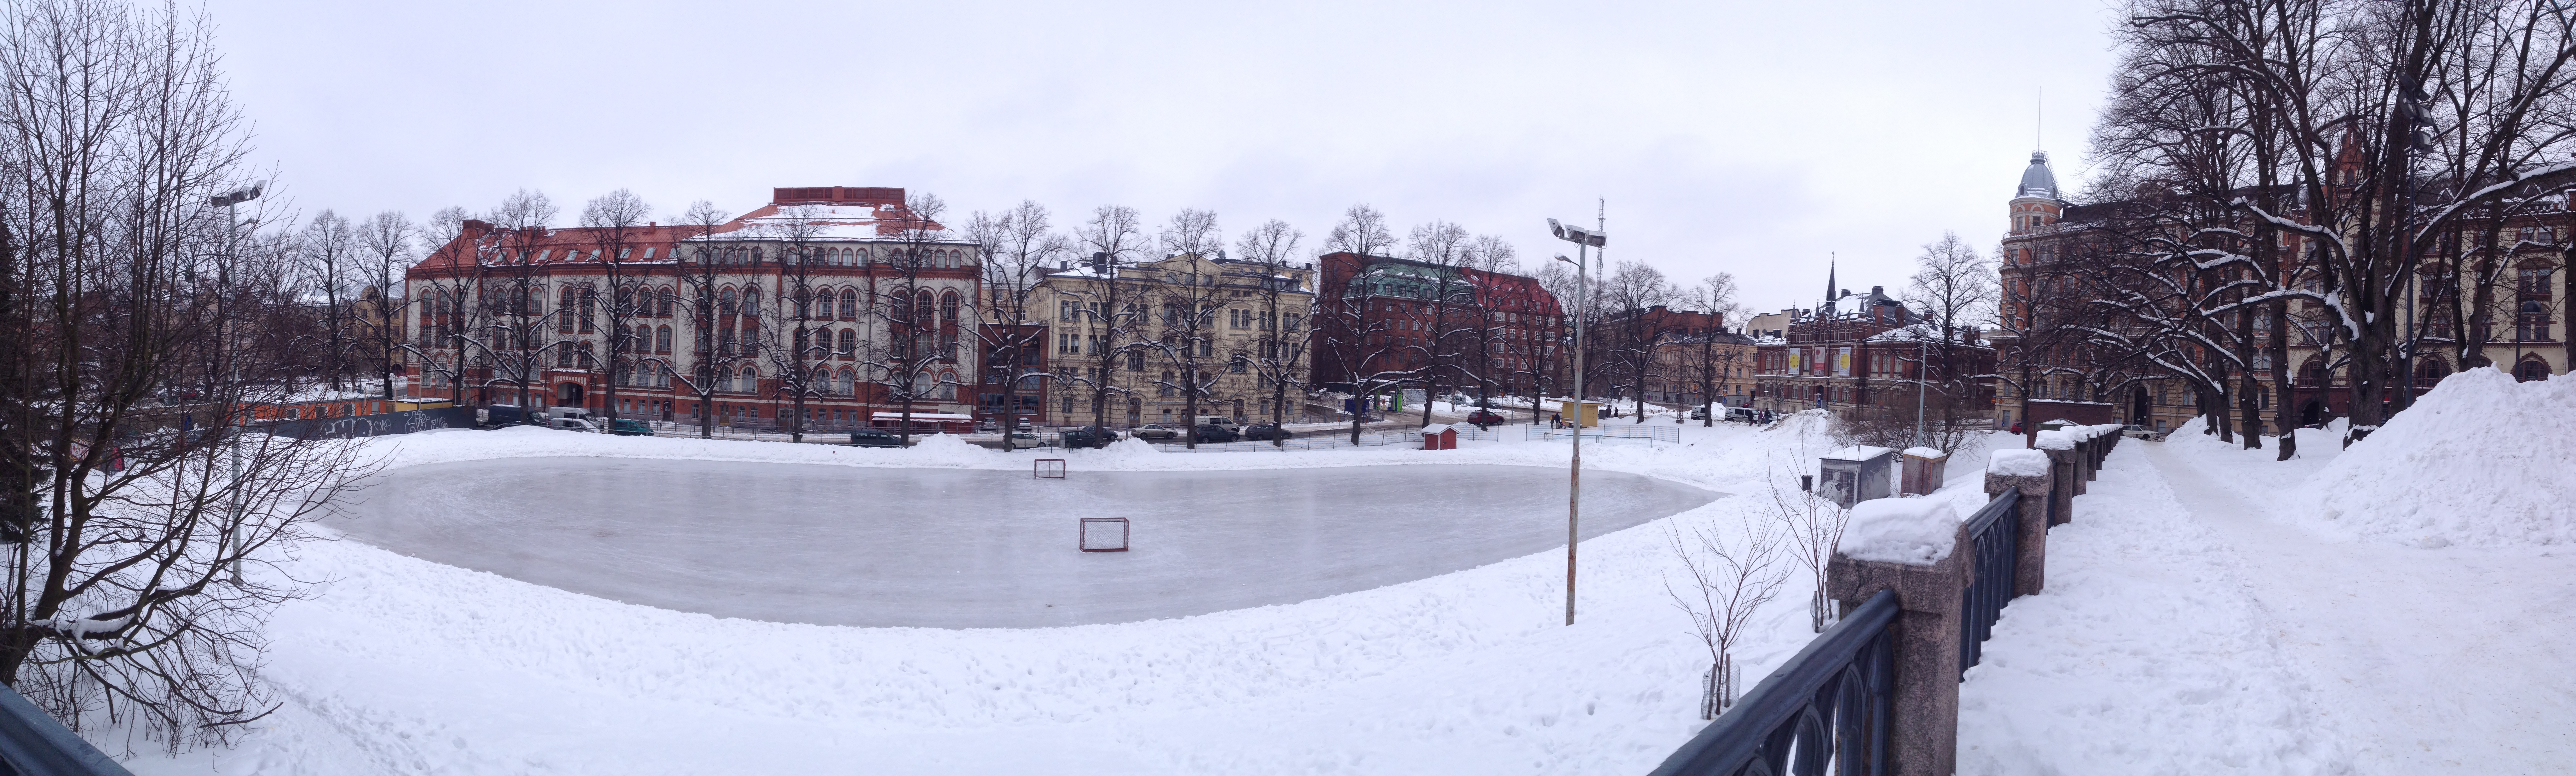 Pond Hockey Wallpaper In Helsinki Image